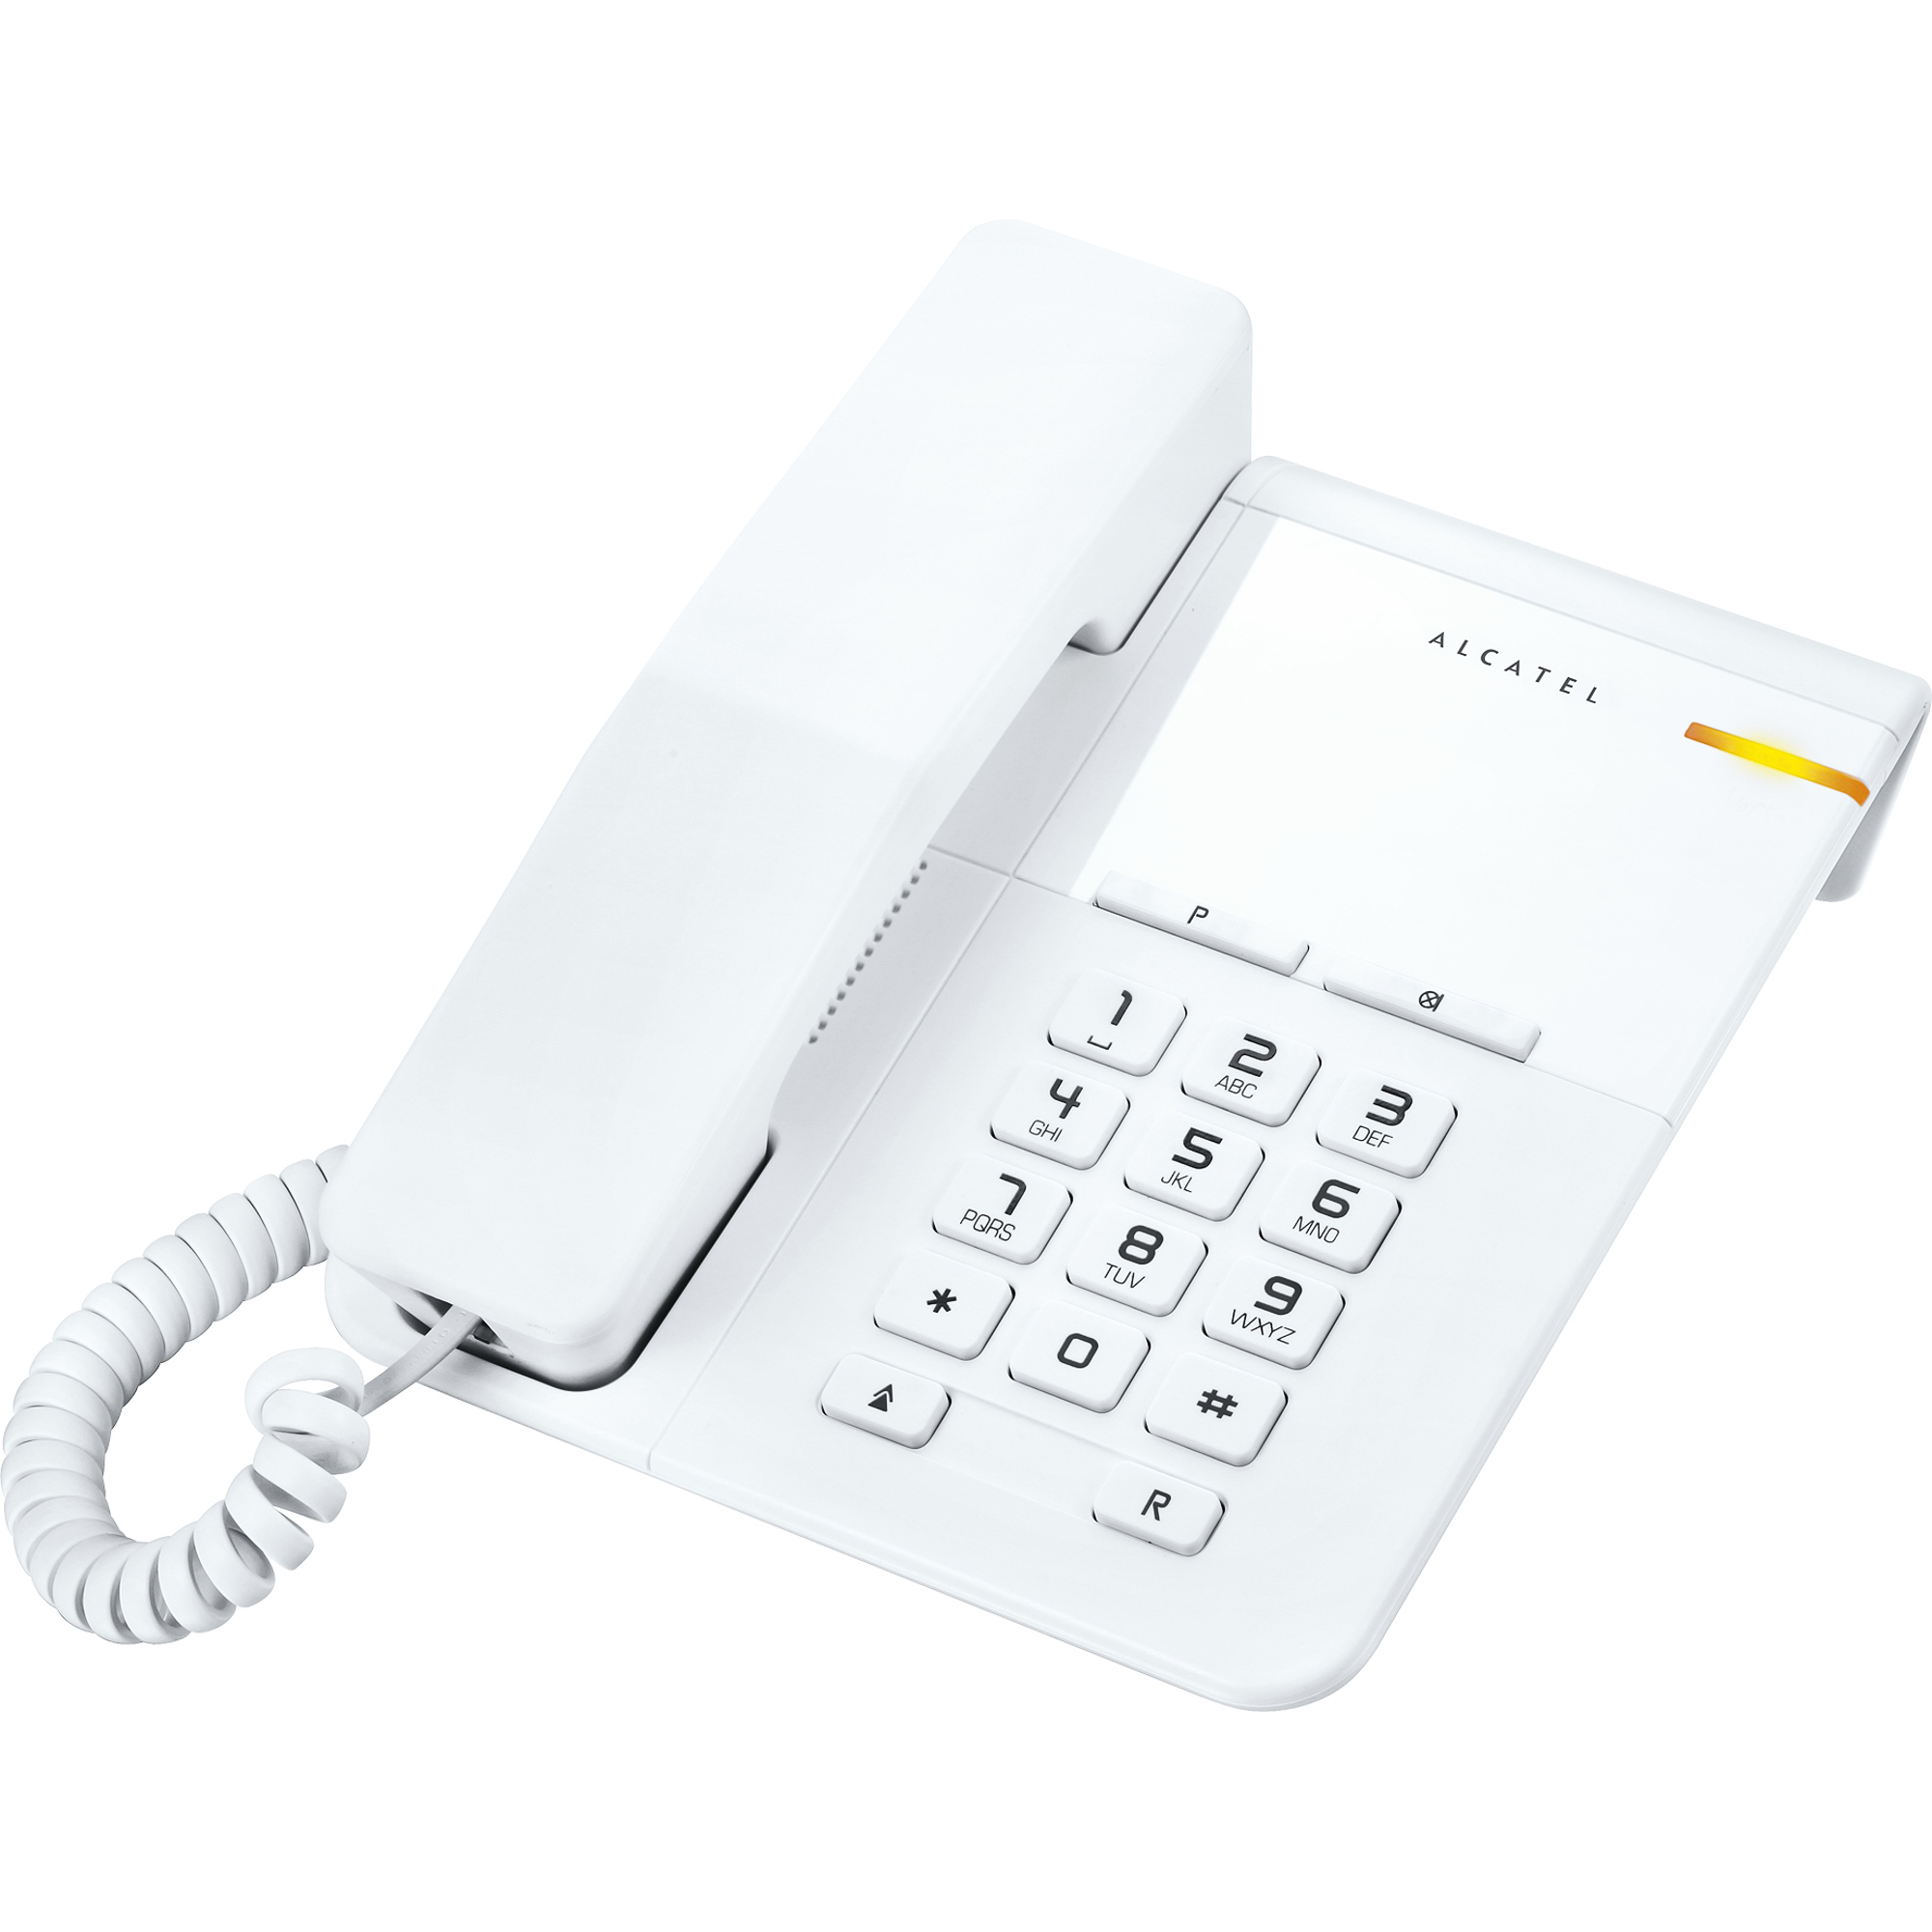 Стационарный телефон Alcatel T22 White